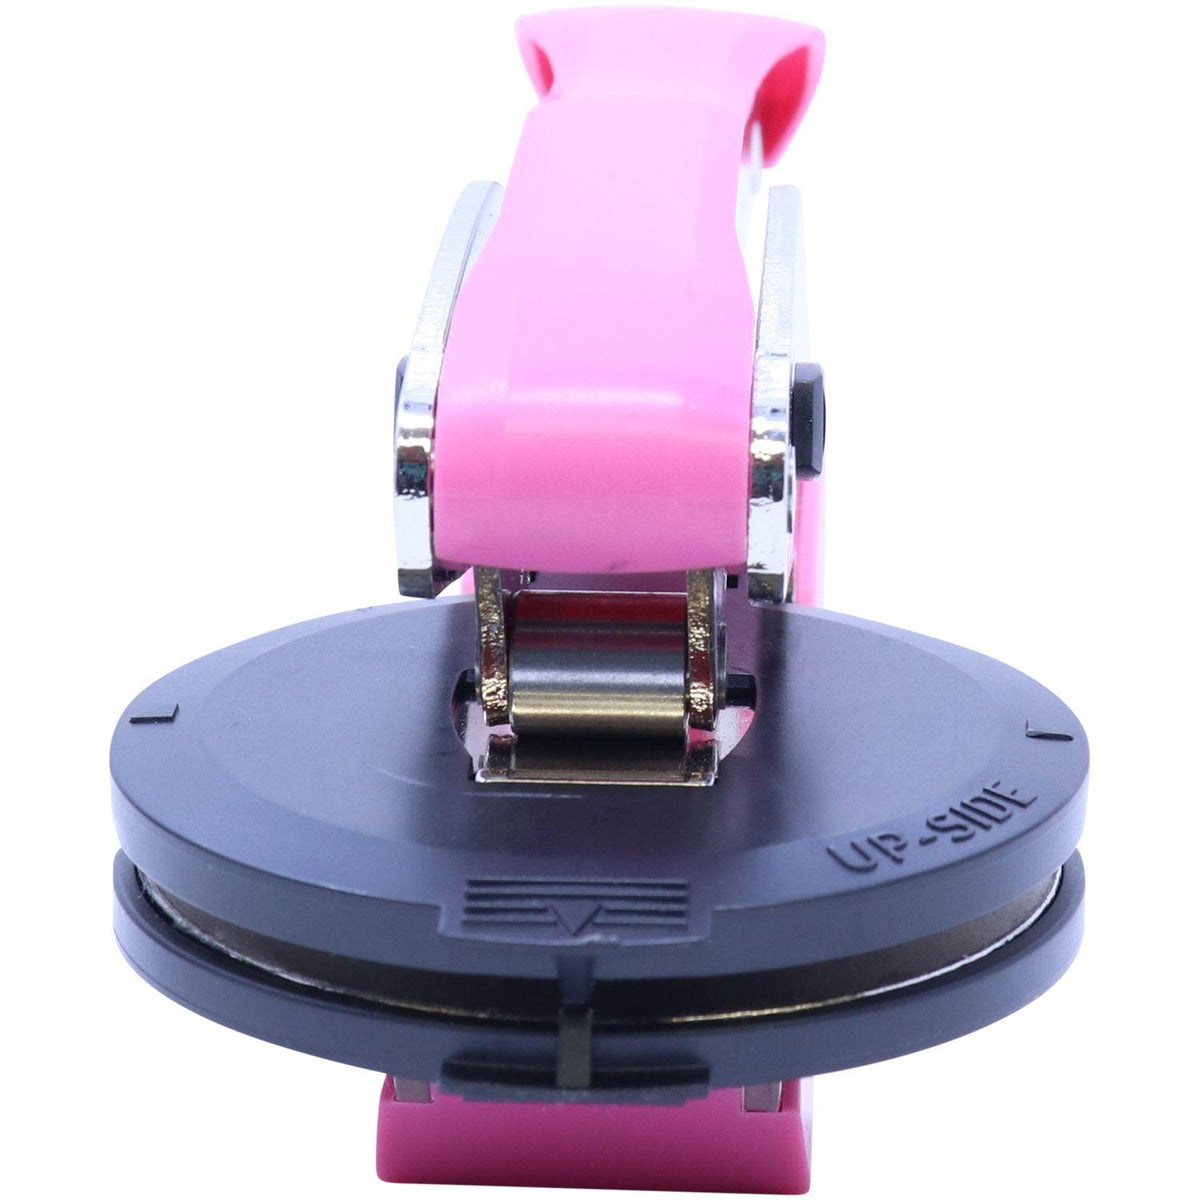 Public Weighmaster Pink Hybrid Handheld Embosser - Engineer Seal Stamps - Embosser Type_Handheld, Embosser Type_Hybrid, Type of Use_Professional